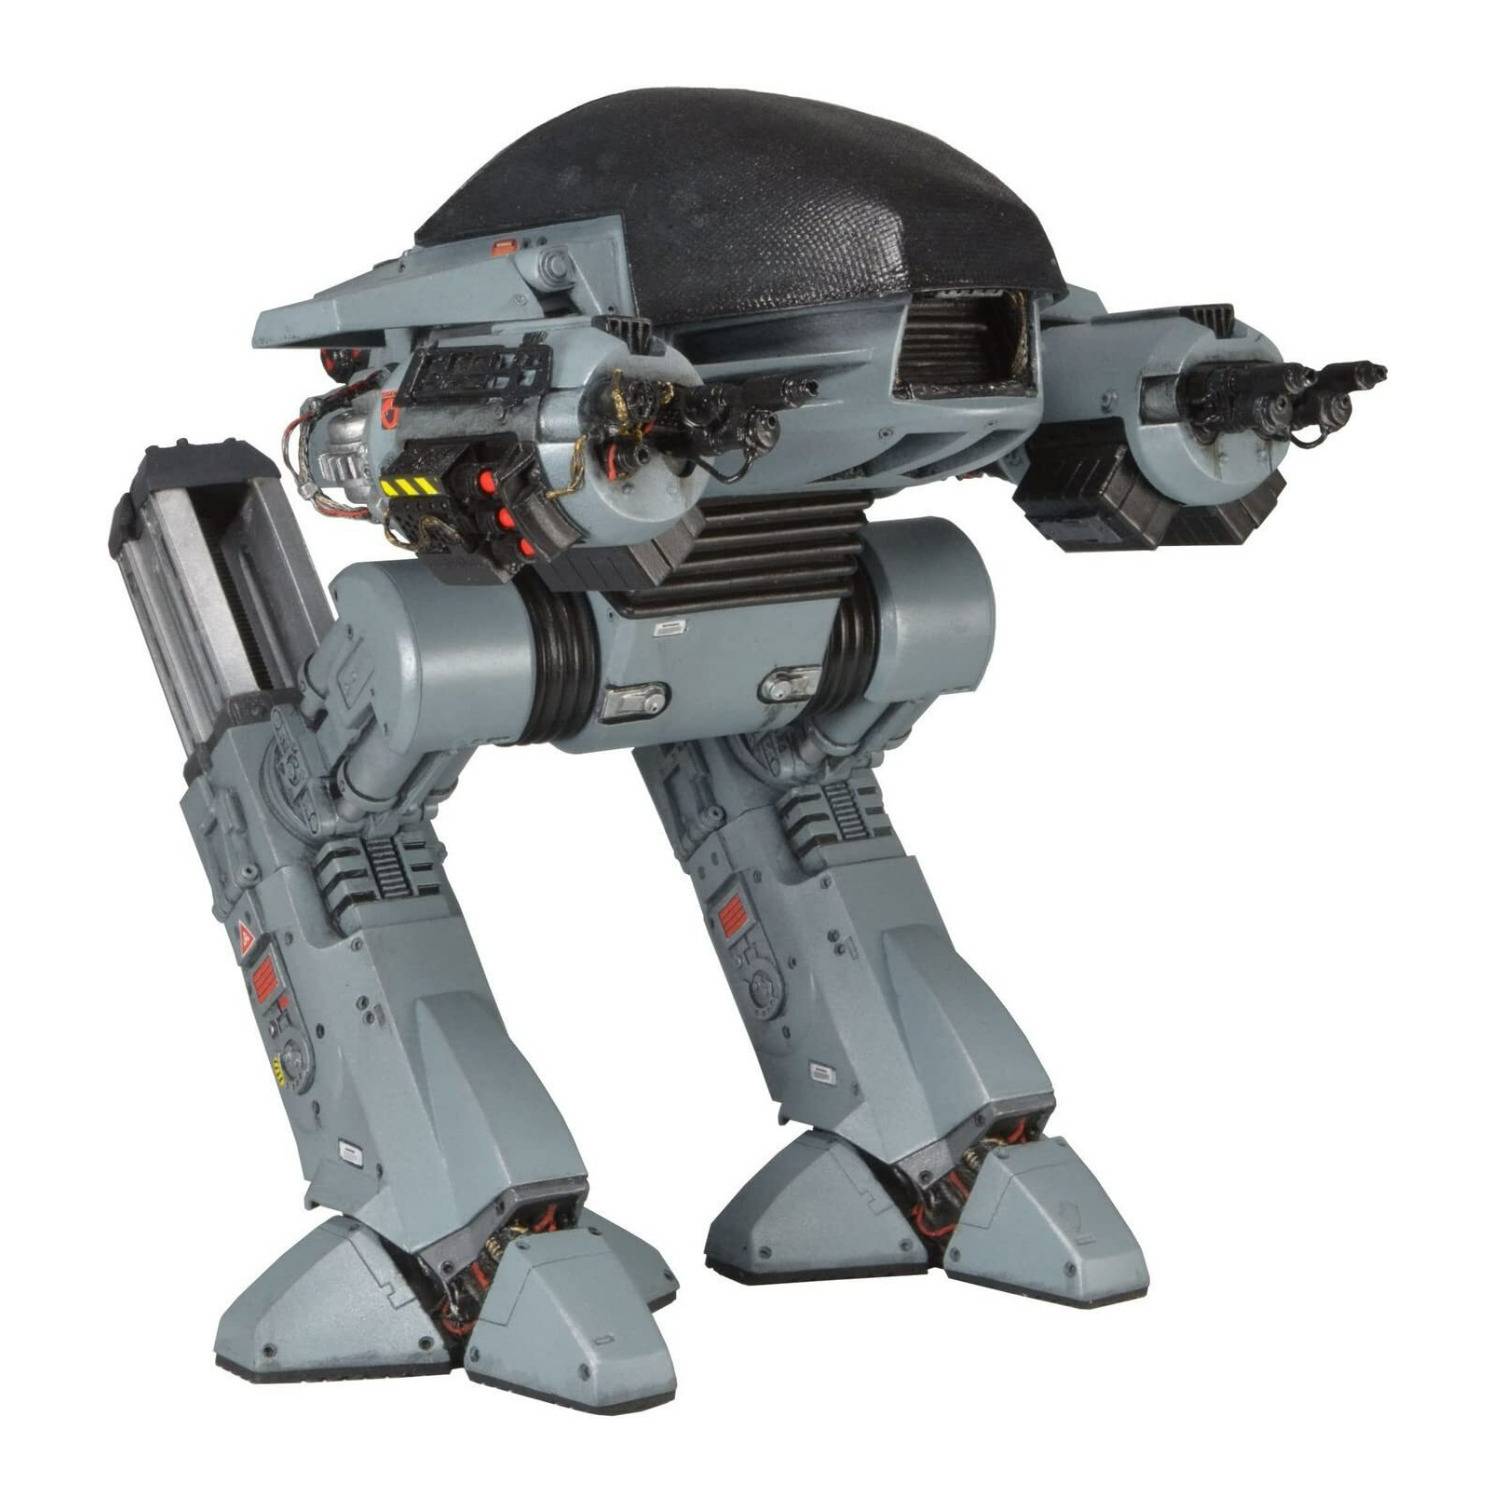 Neca Robocop ED-209 10-Inch Action Figure with Sound